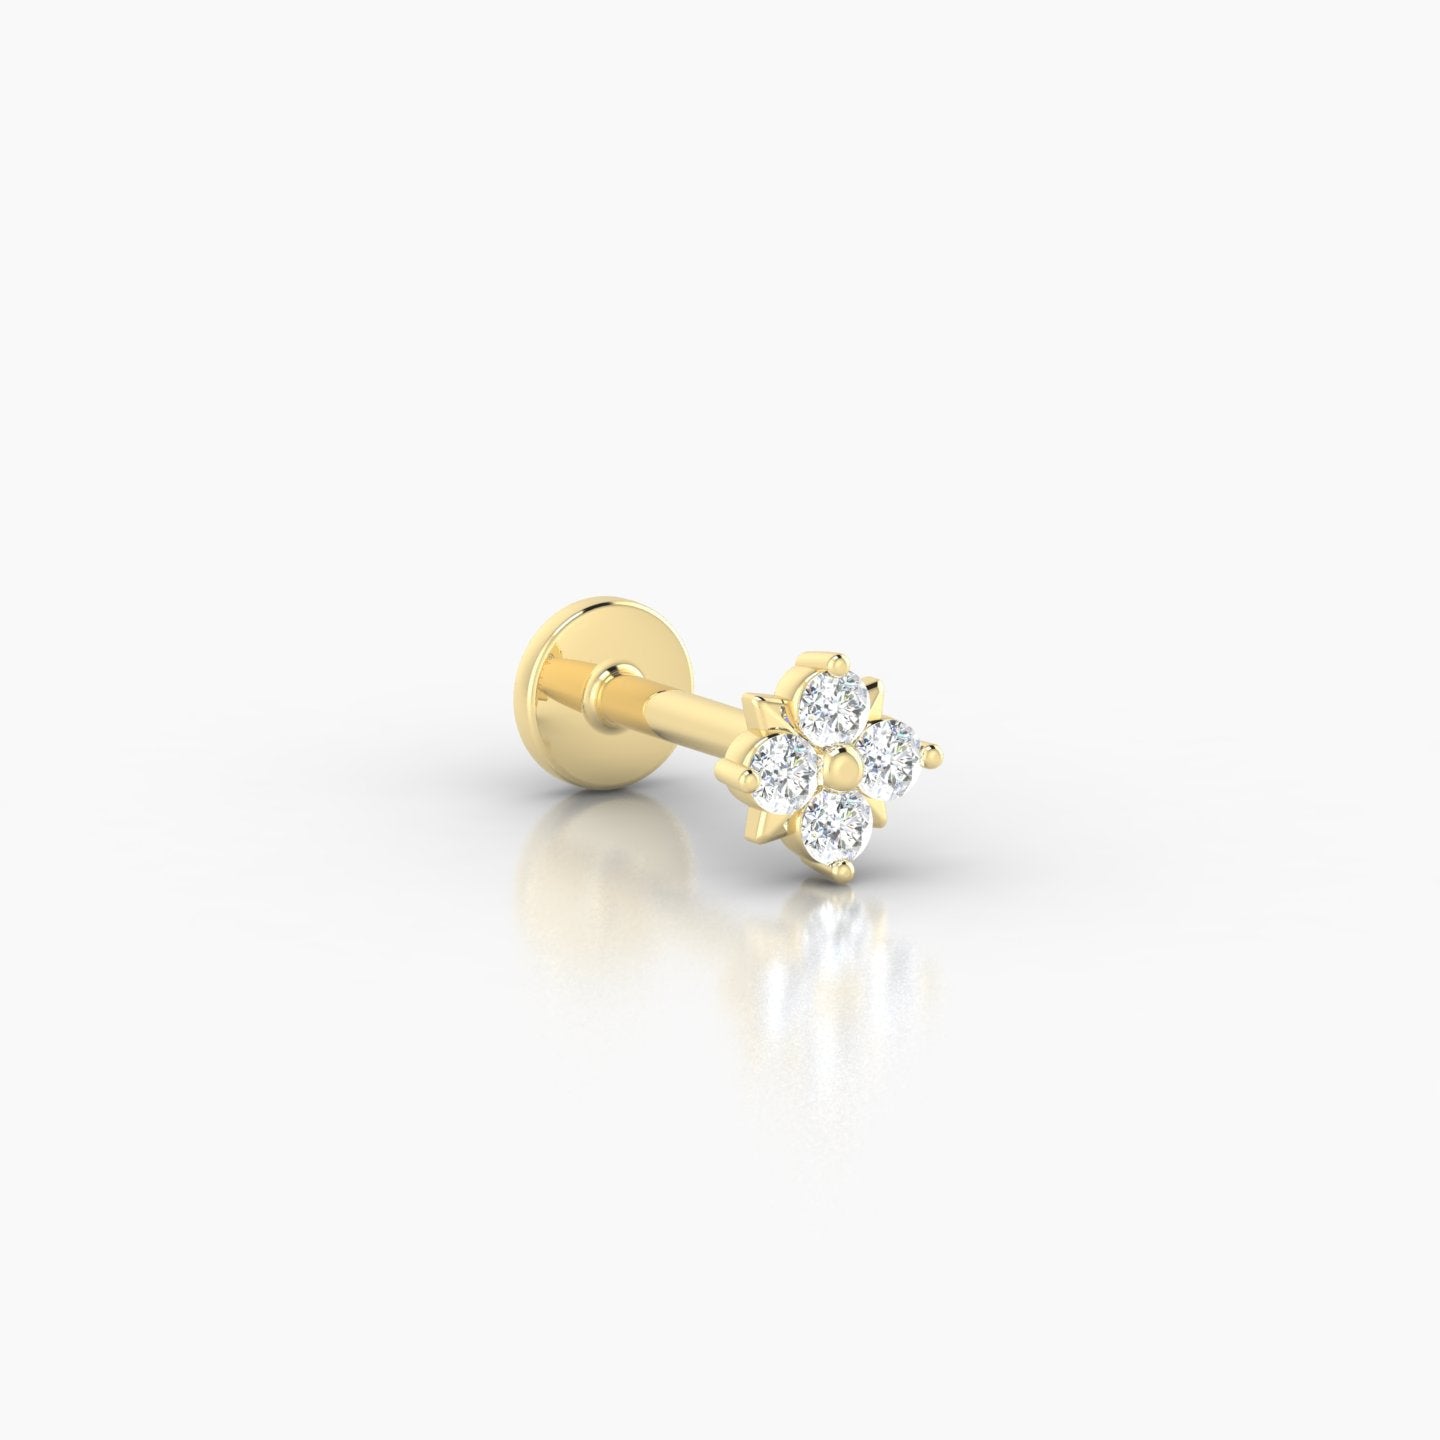 Nymph | 18k Yellow Gold 4.5 mm Flower Diamond Piercing